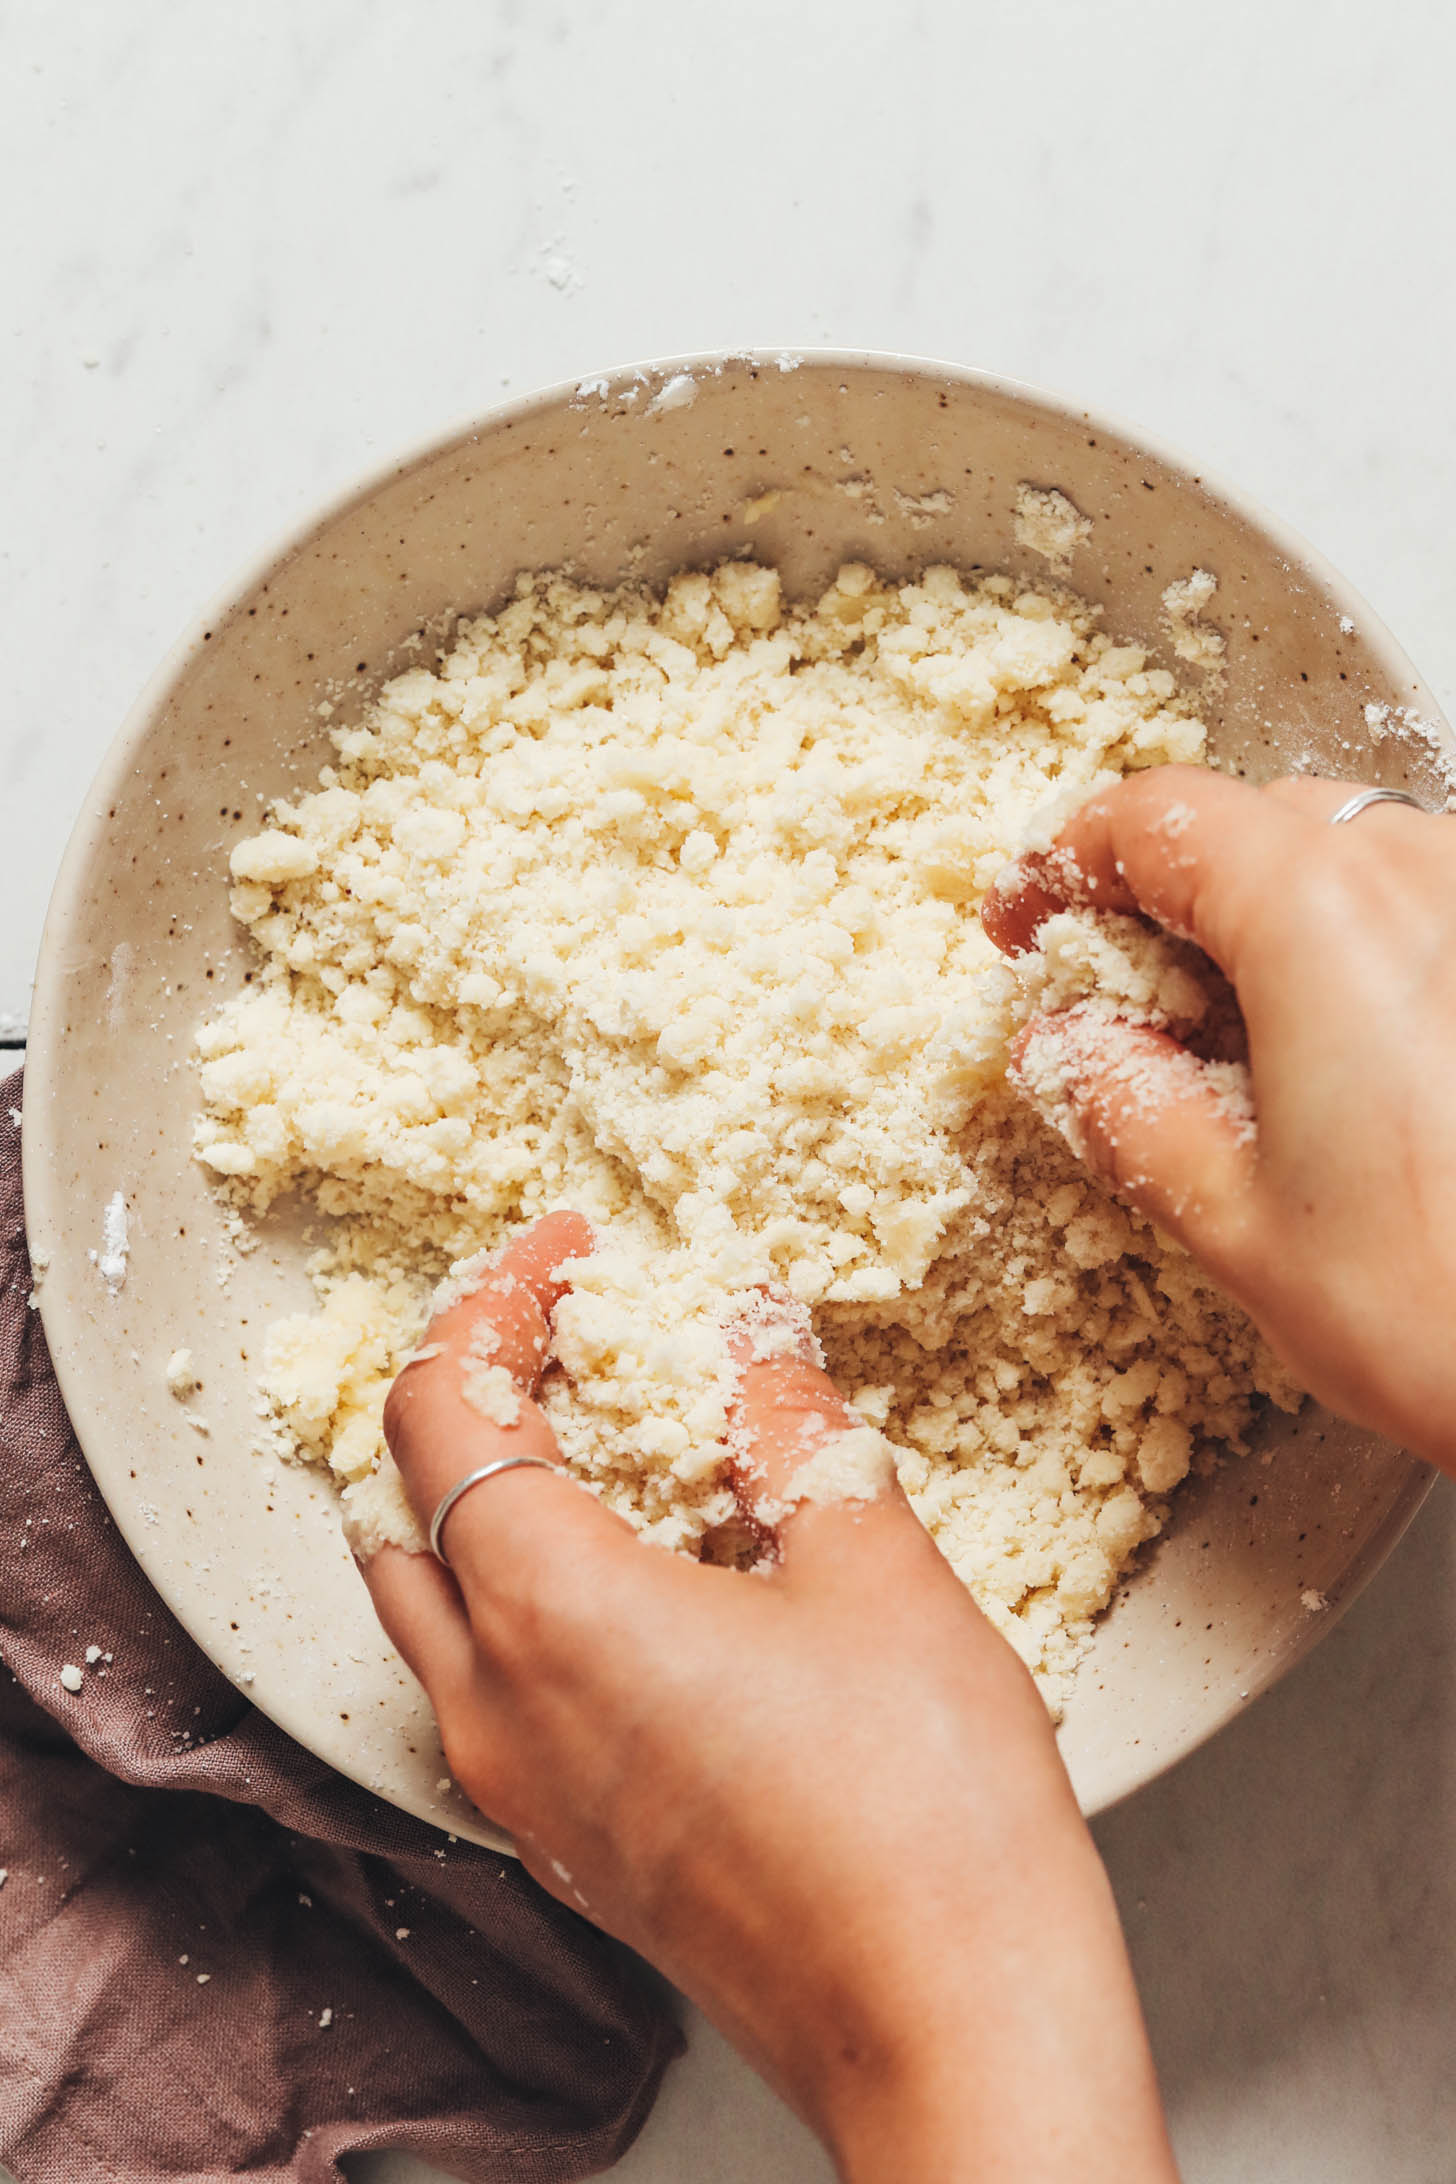 Hands mixing coconut oil into the cobbler dough